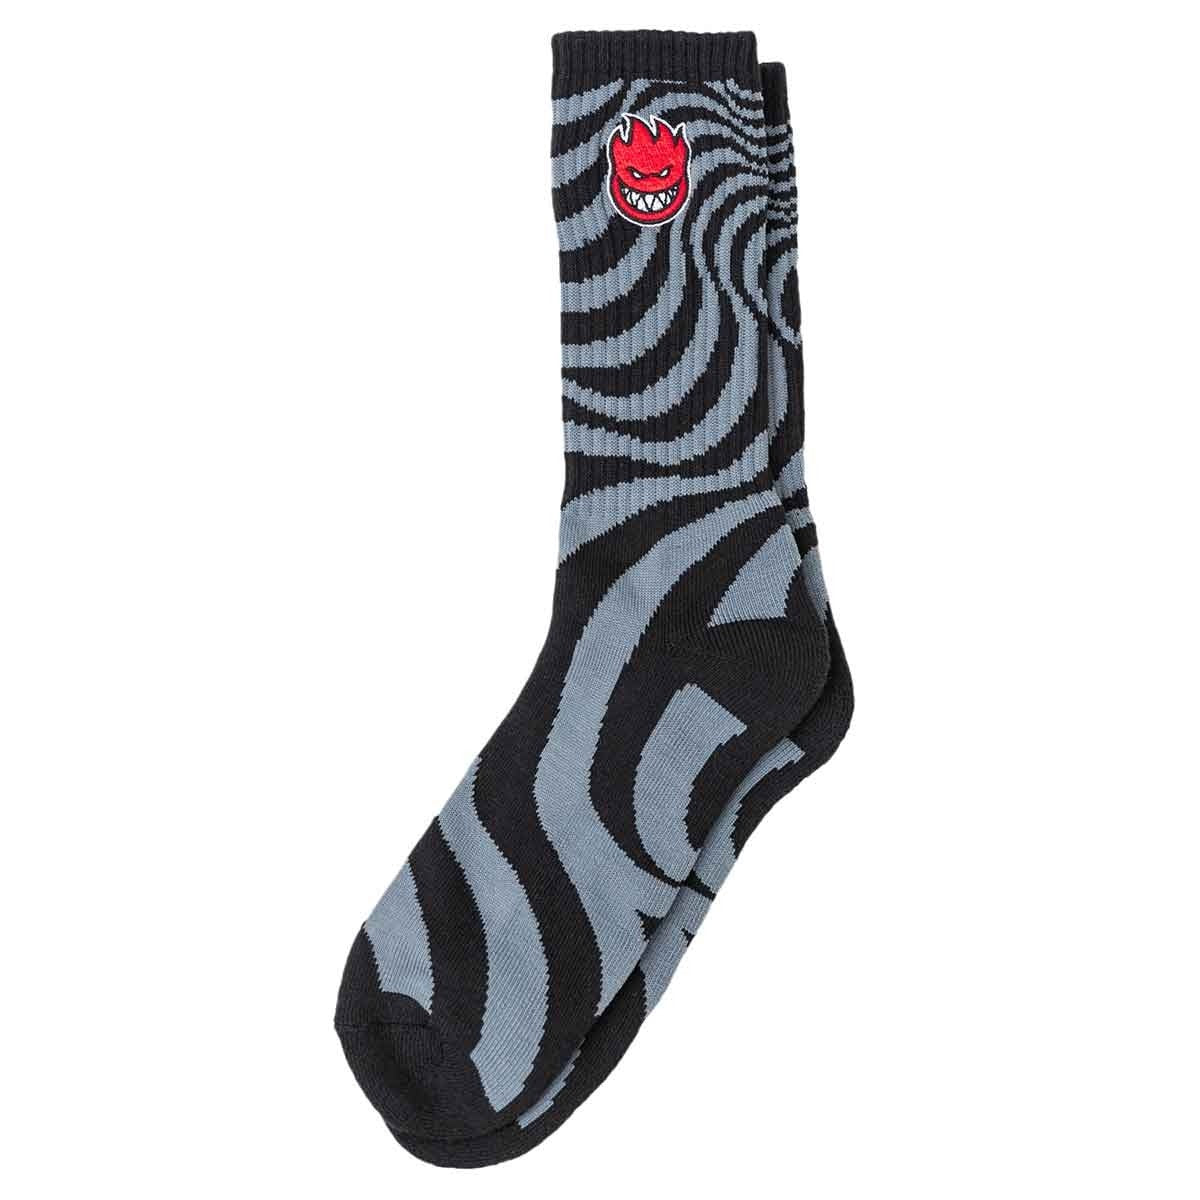 Swirl Bighead Socks (Black/Grey)